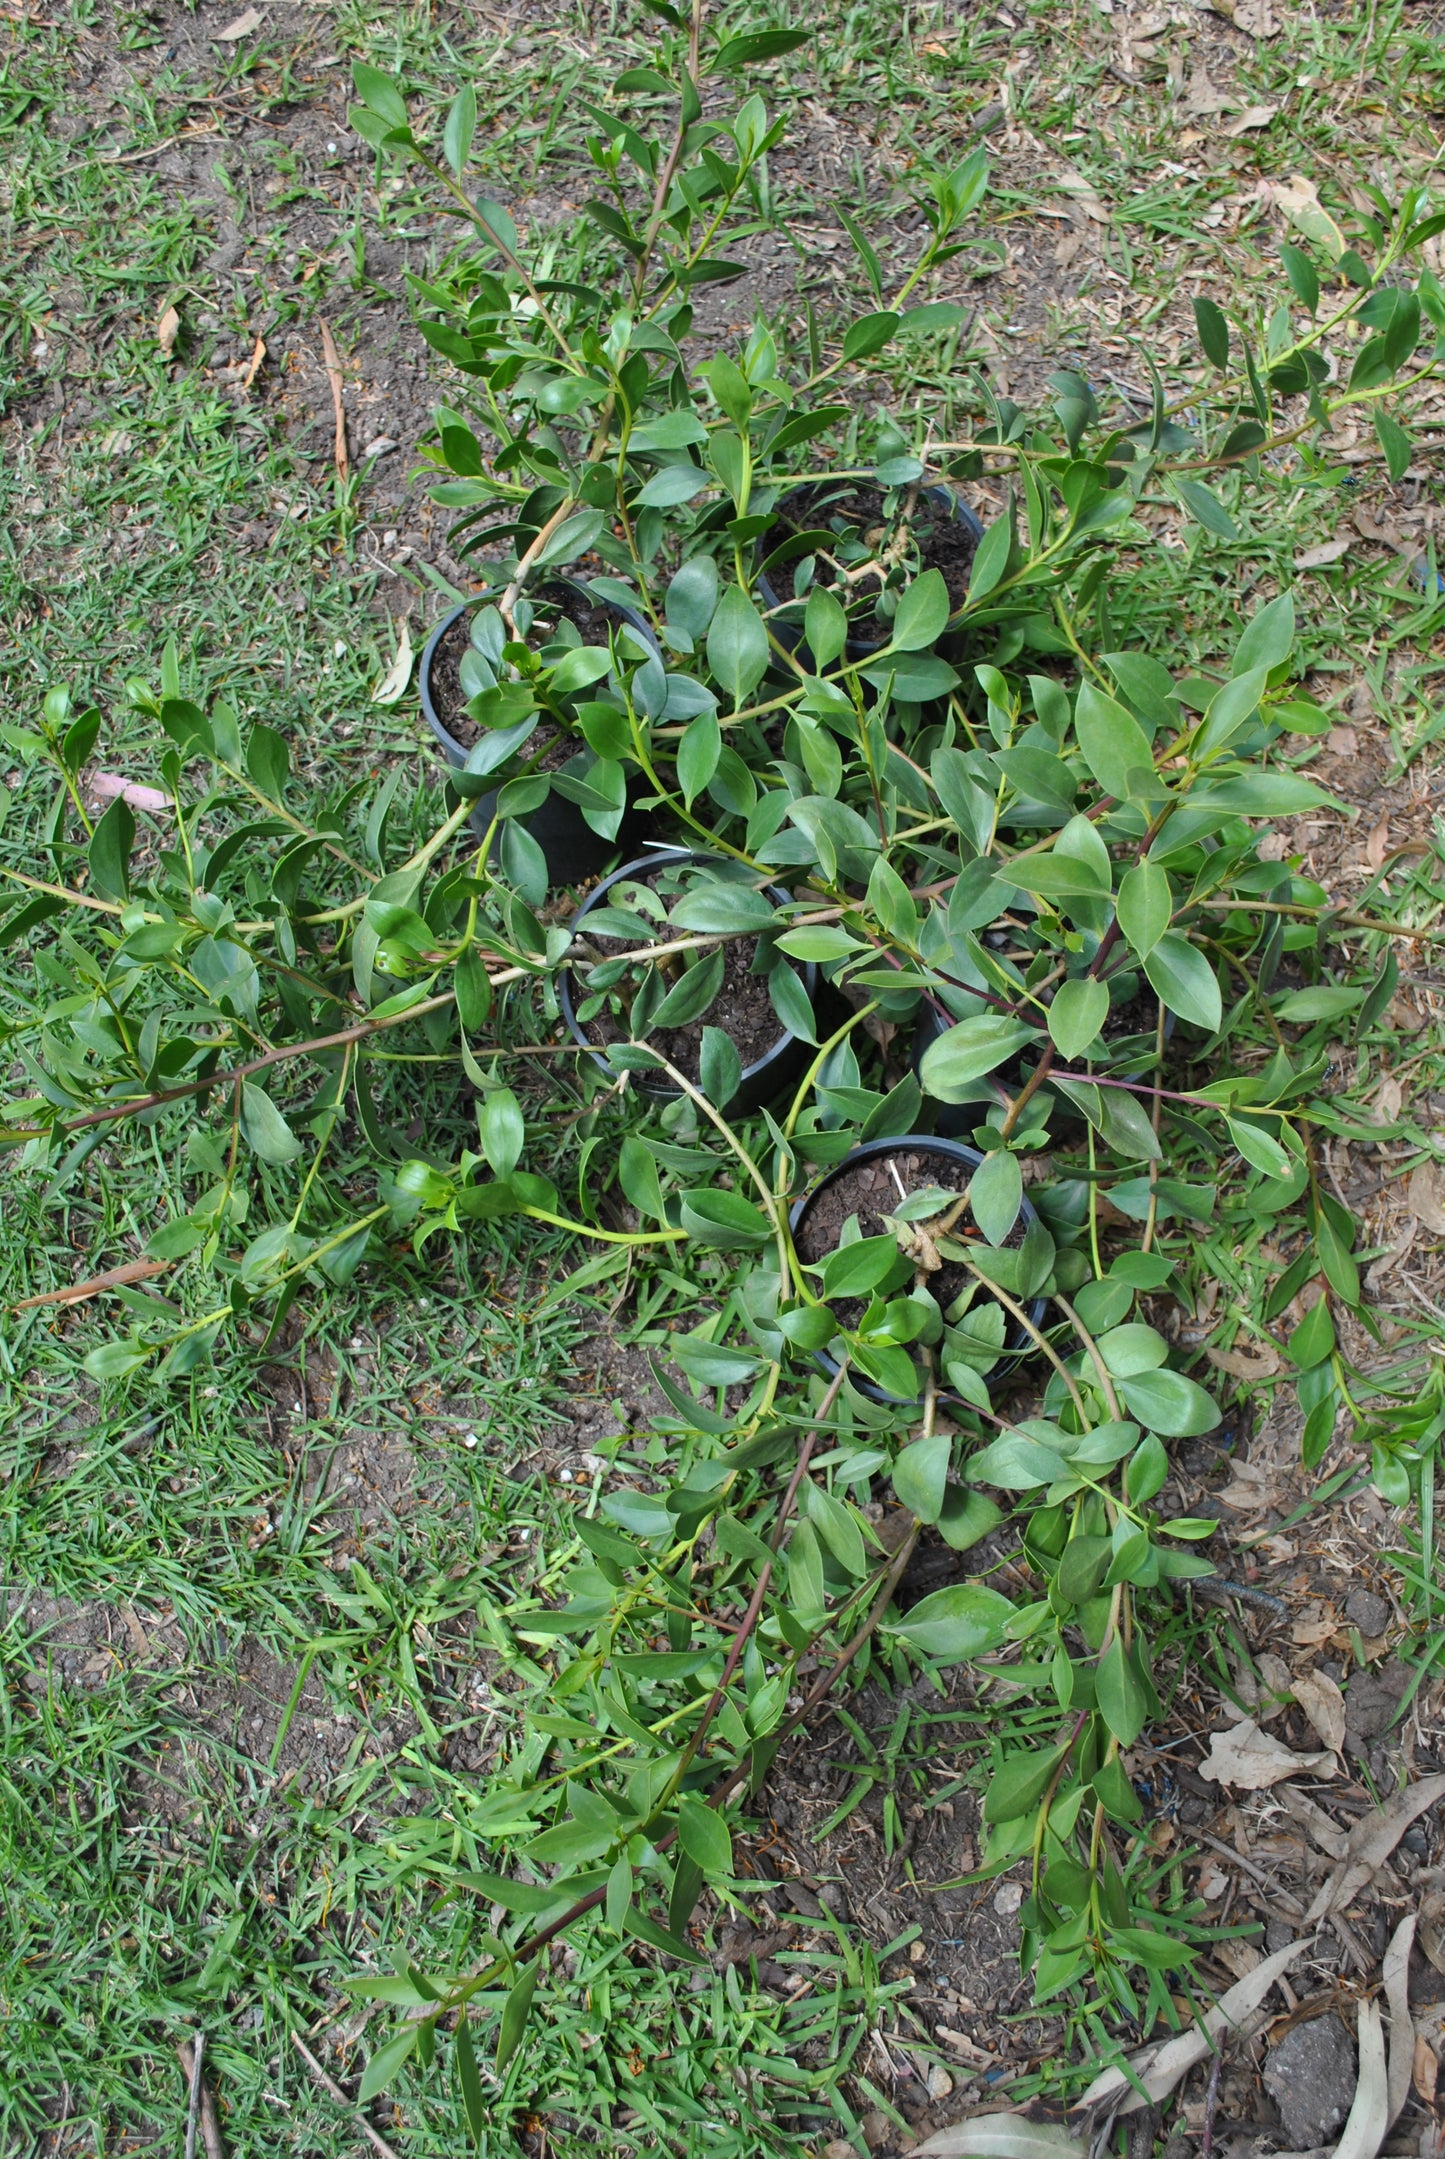 Groundcover Myoporum ellipticum 'Boobialla' grouped together in small black pots